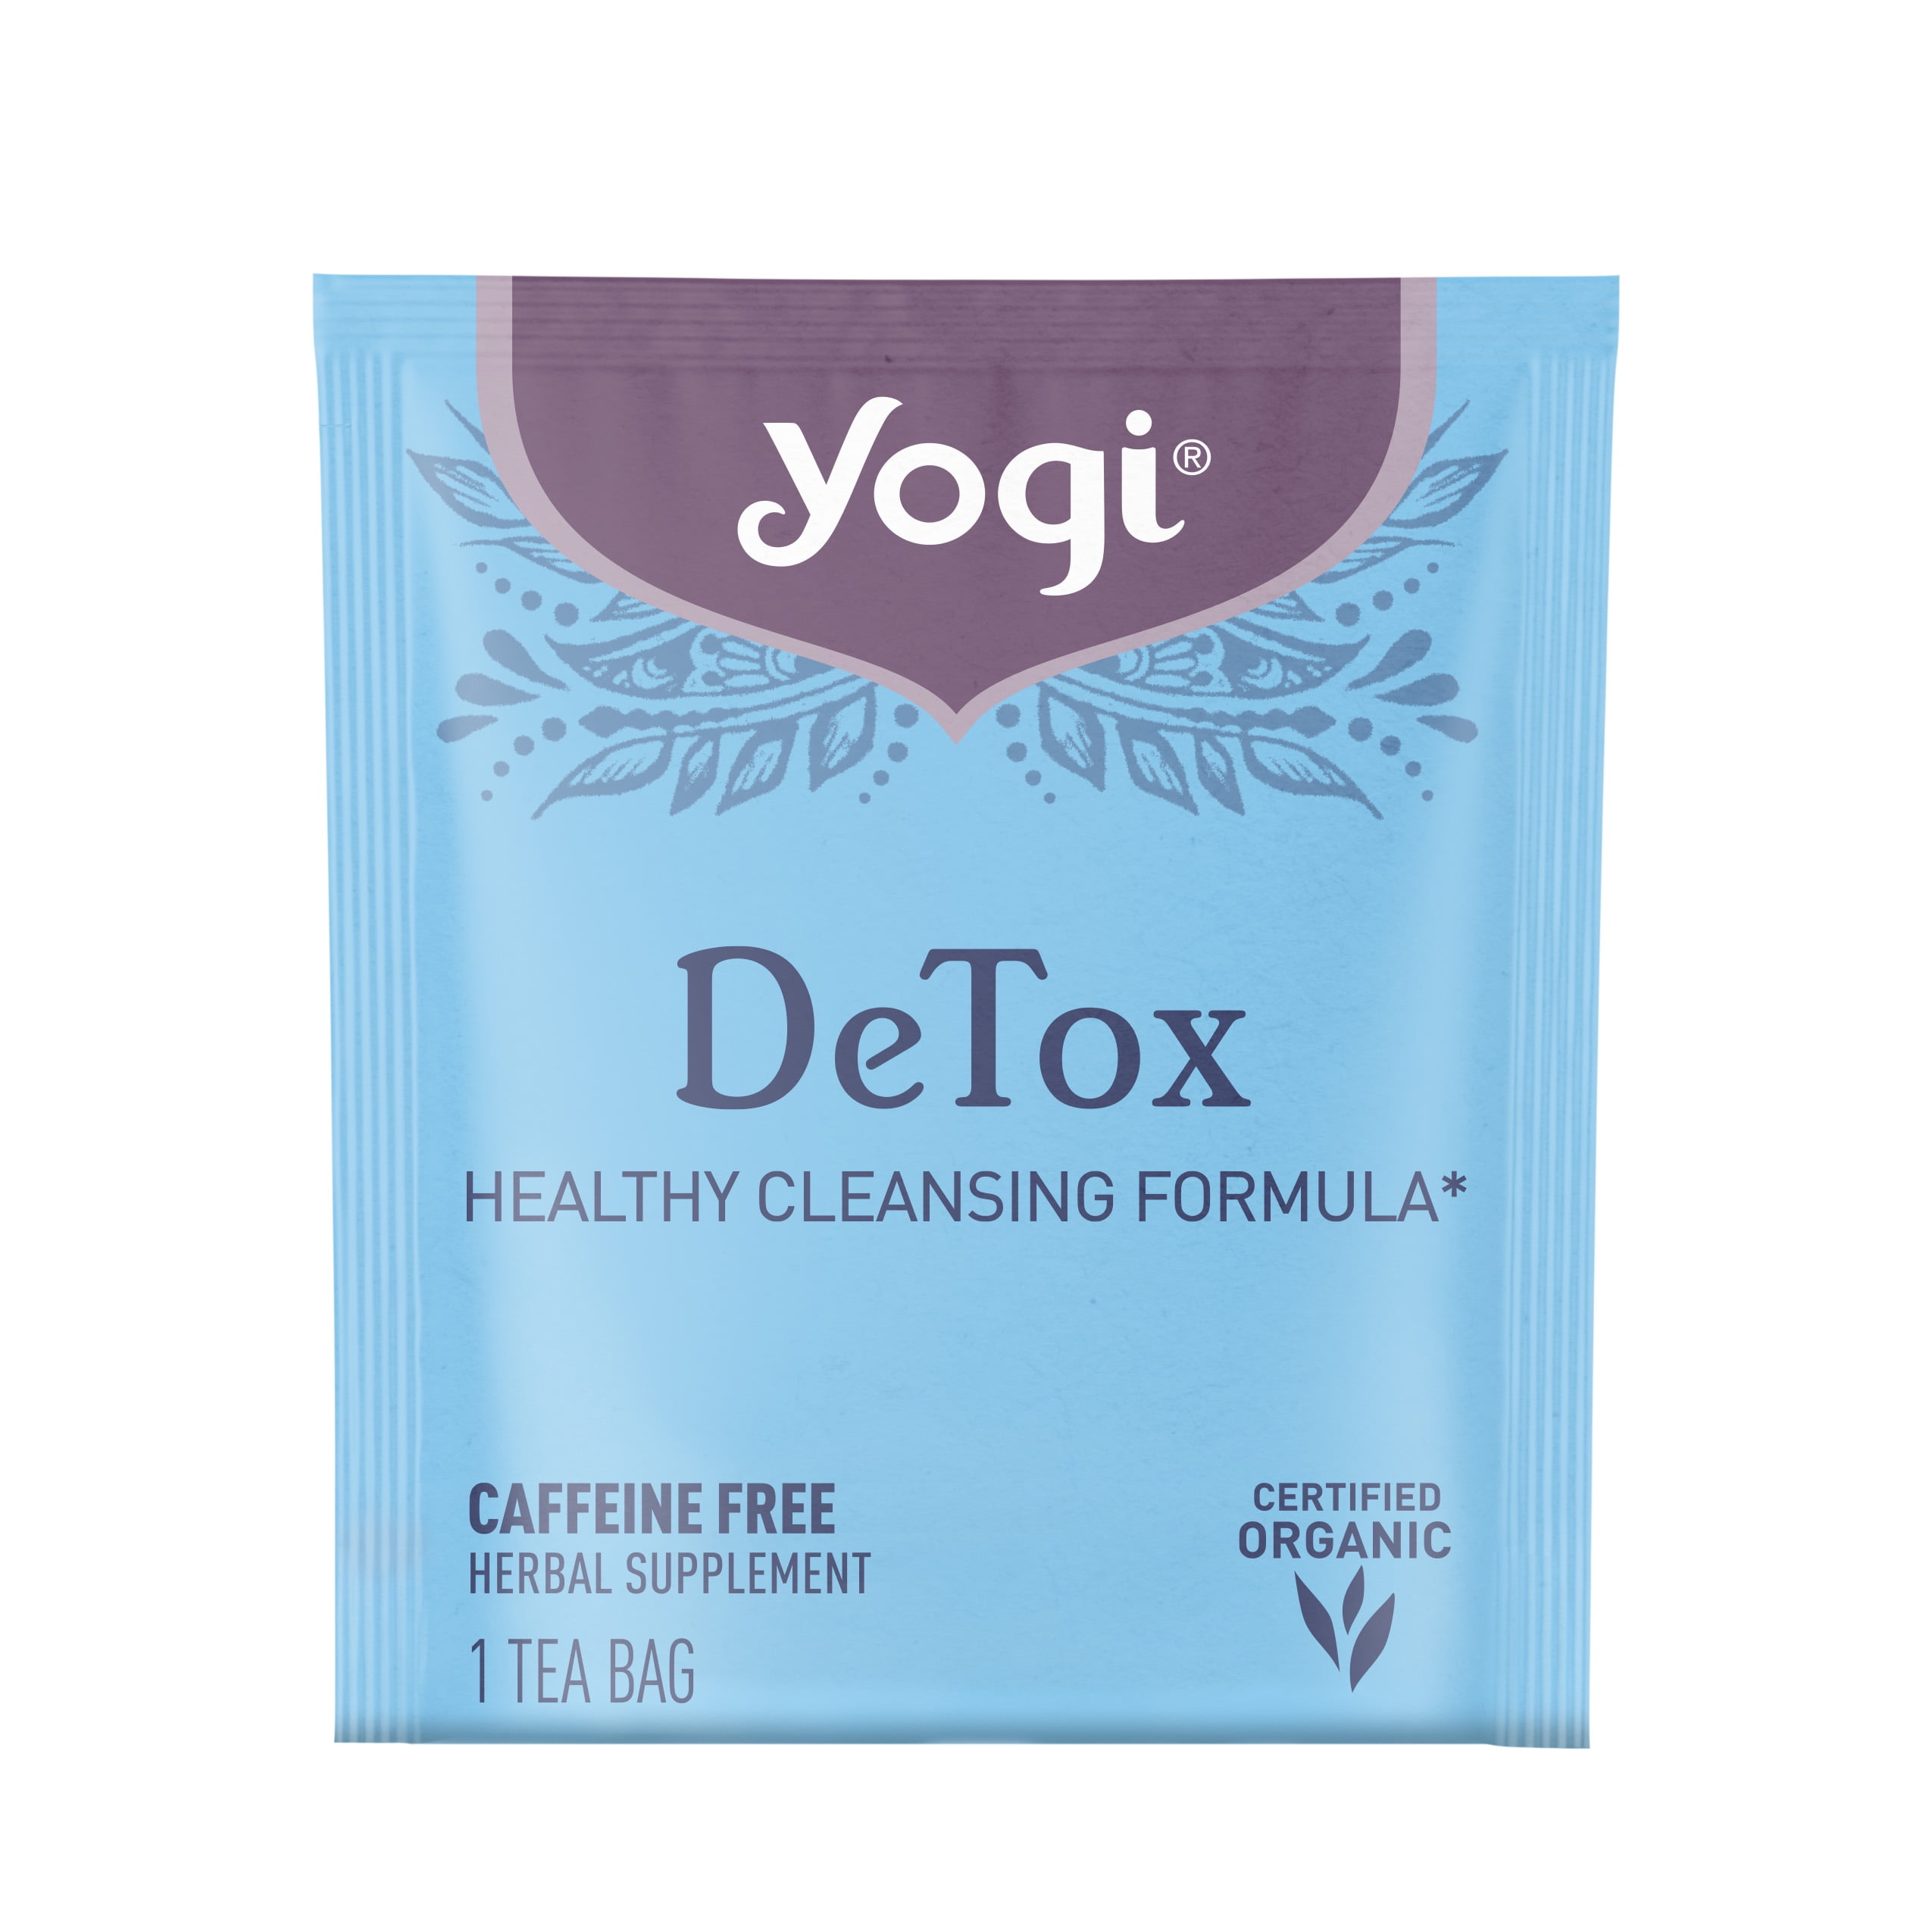 Detoxify your body with Yogi Tea Detox Bio